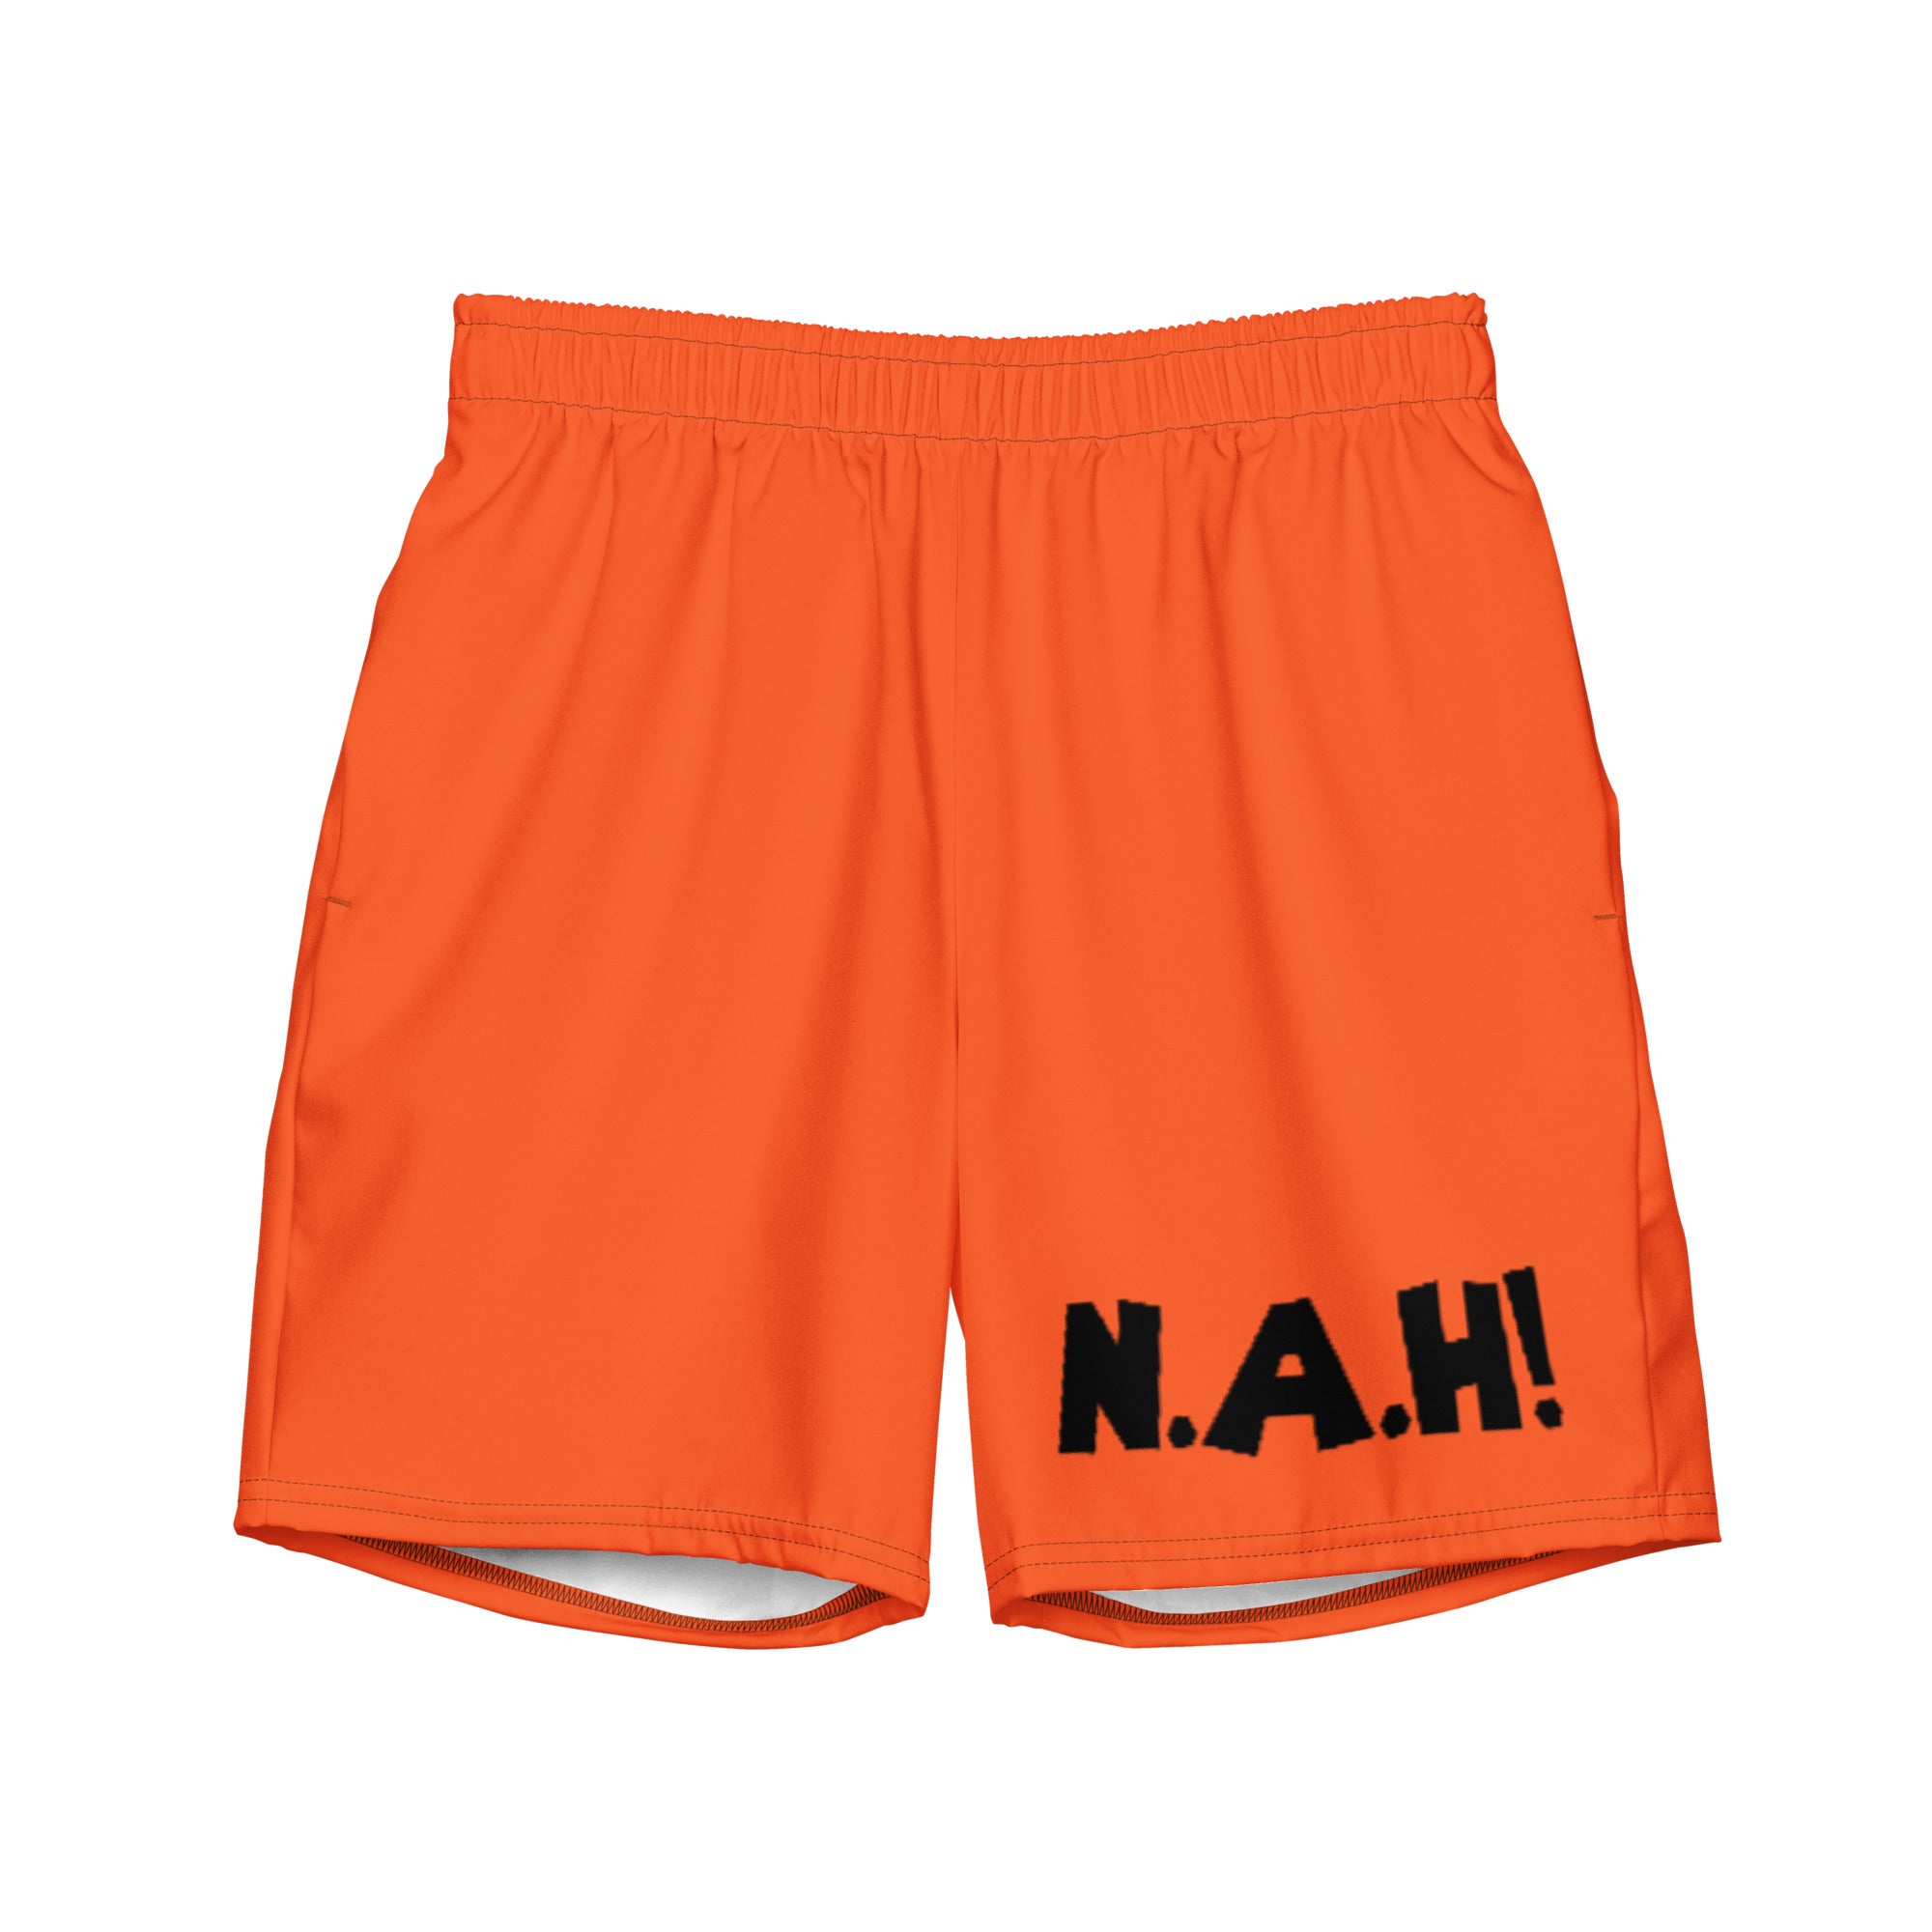 King's 'N.A.H!' Swim Trunks (Orange)